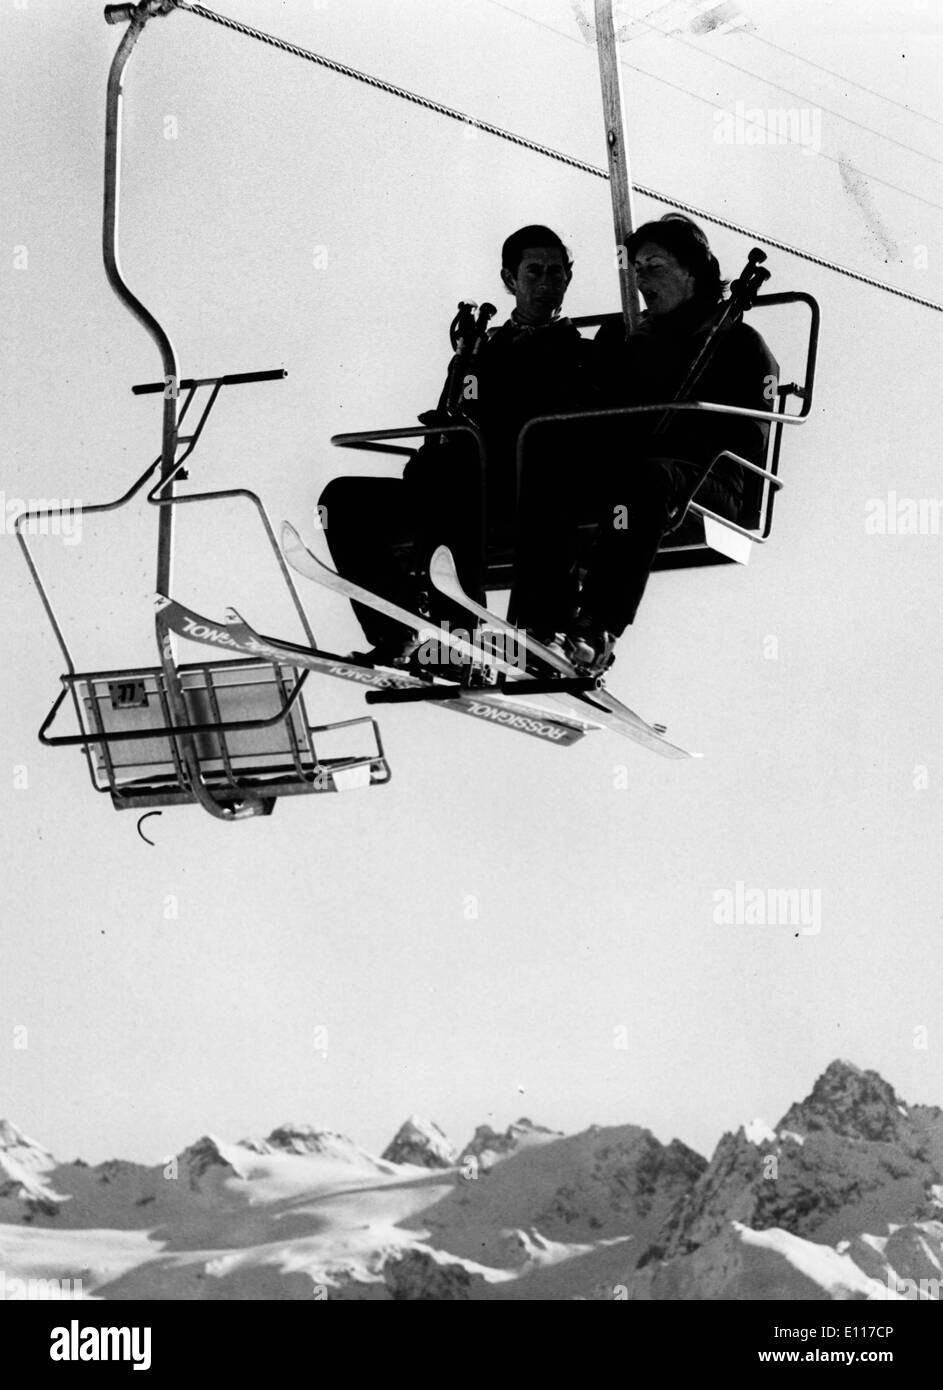 Prince Charles on ski vacation with woman Stock Photo